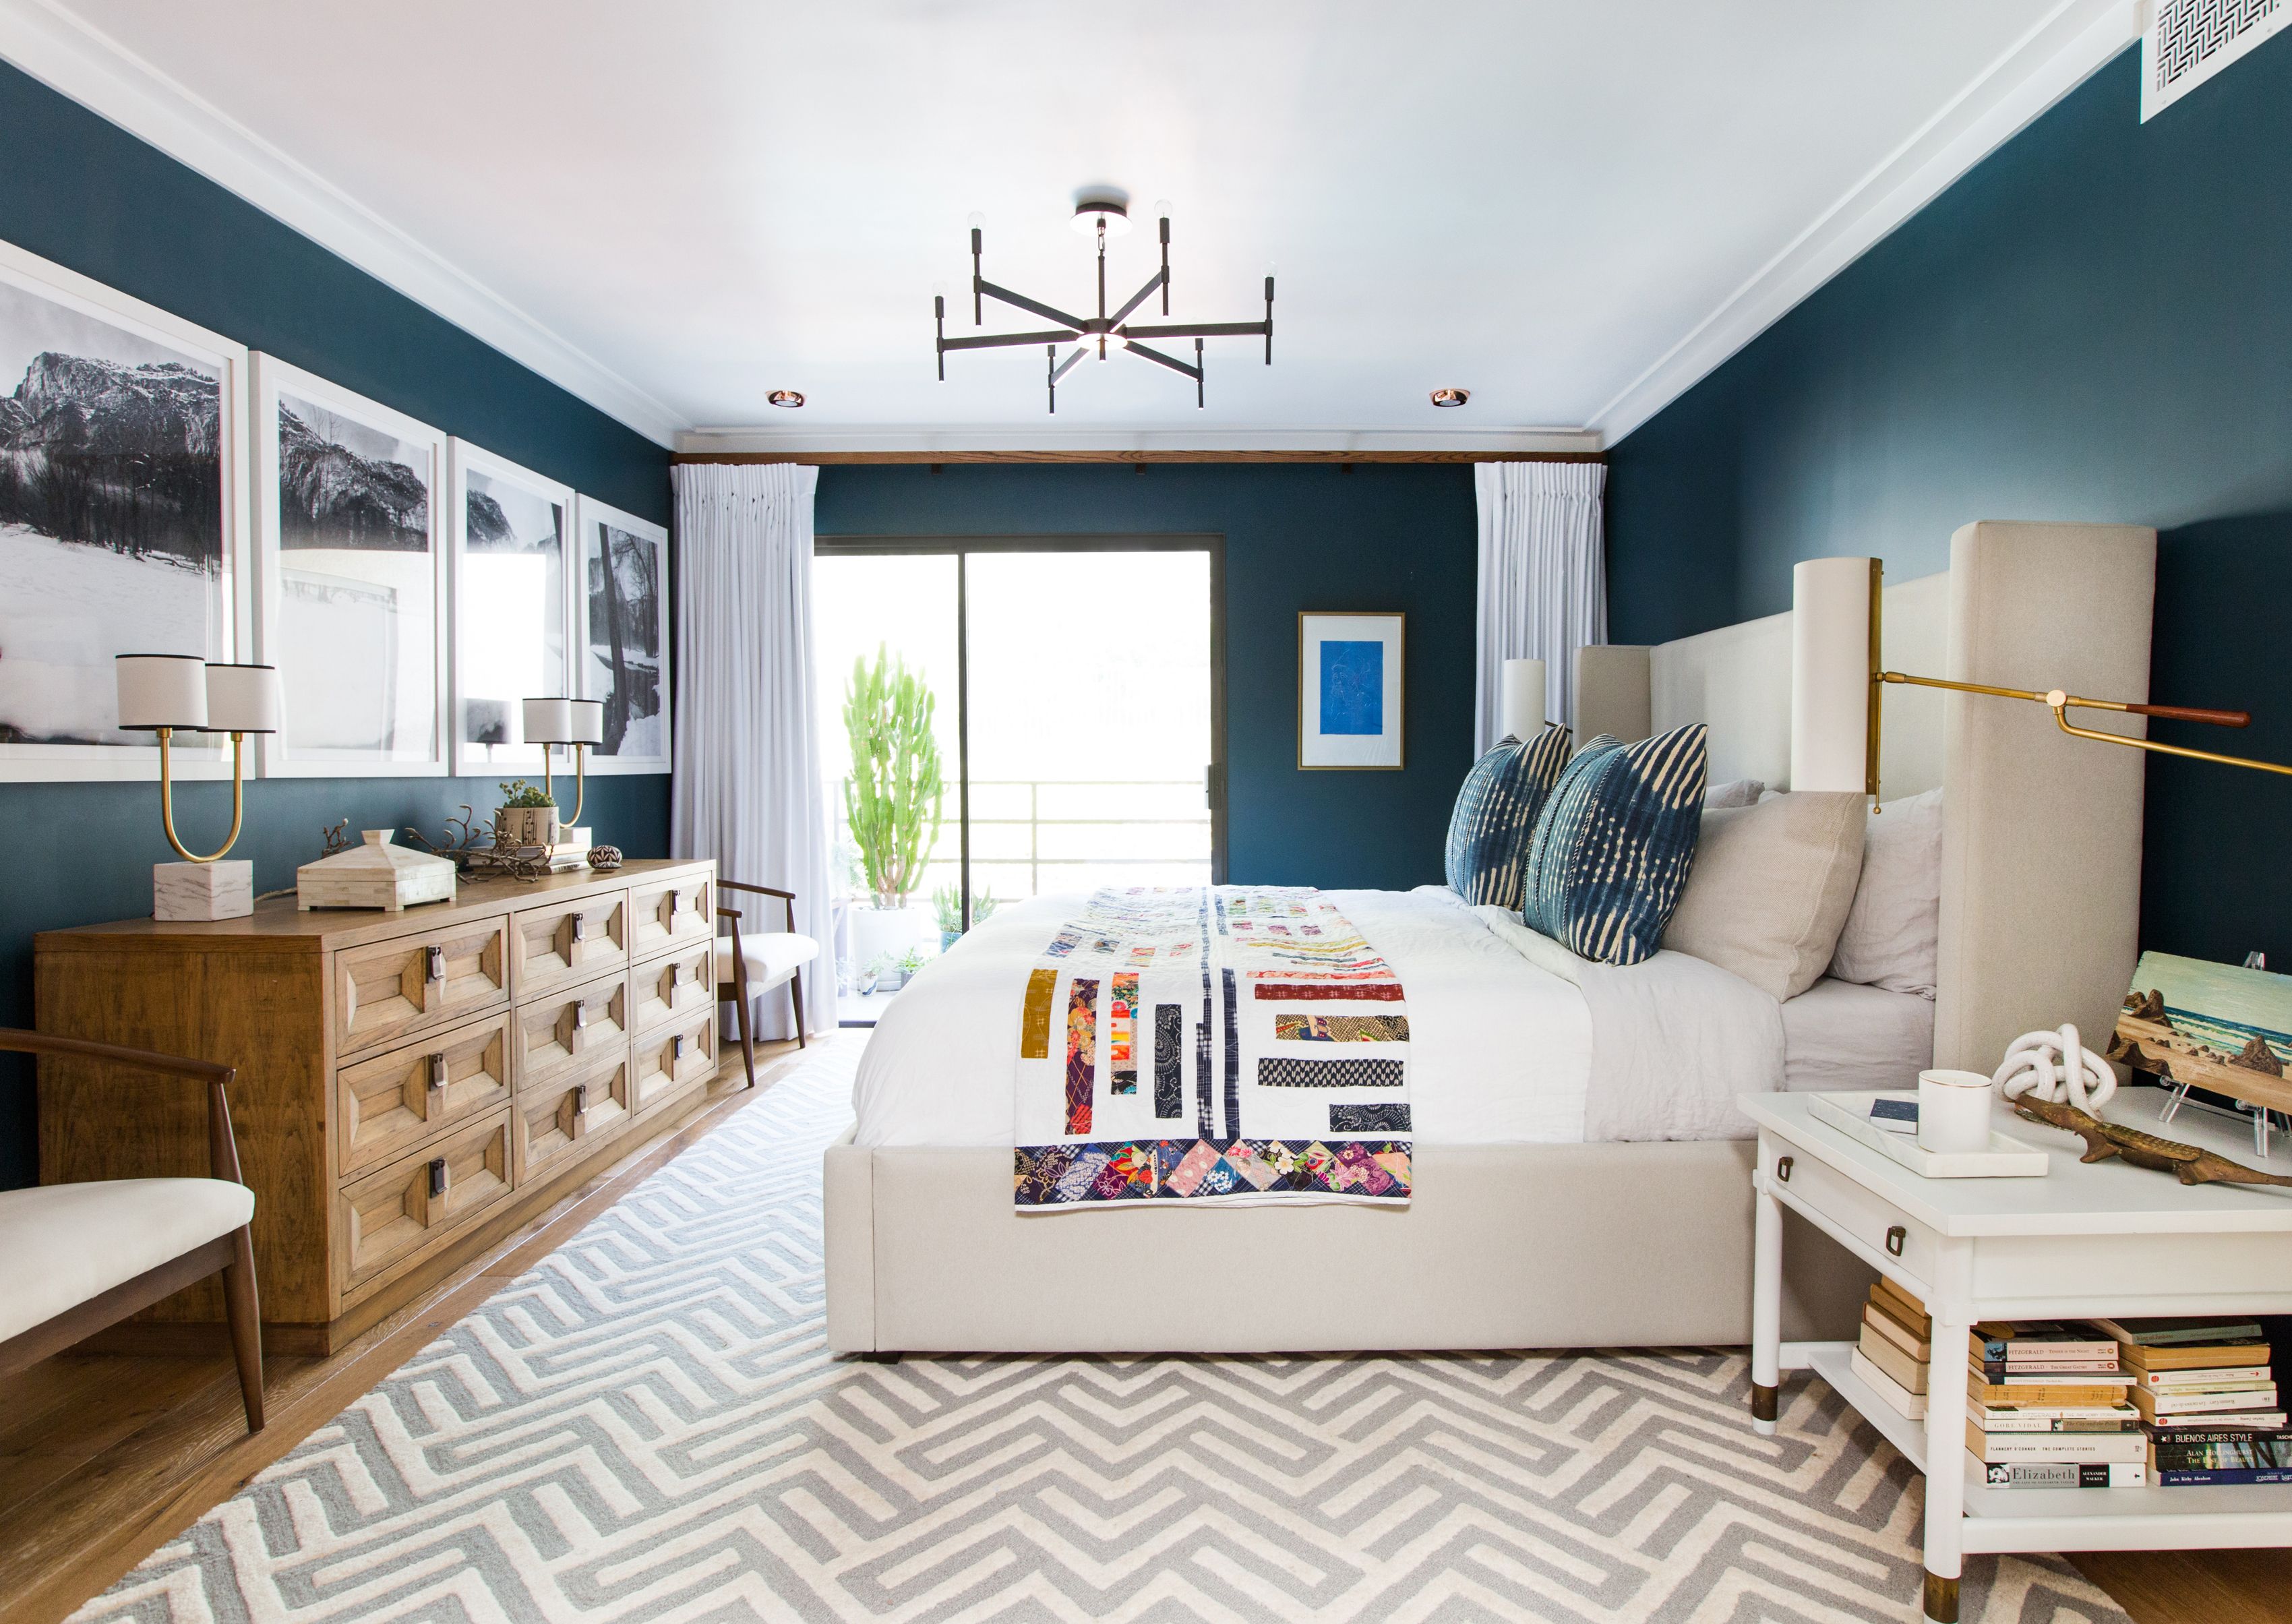 Best Home Decorating Ideas - 80+ Top Designer Decor Tricks & Tips